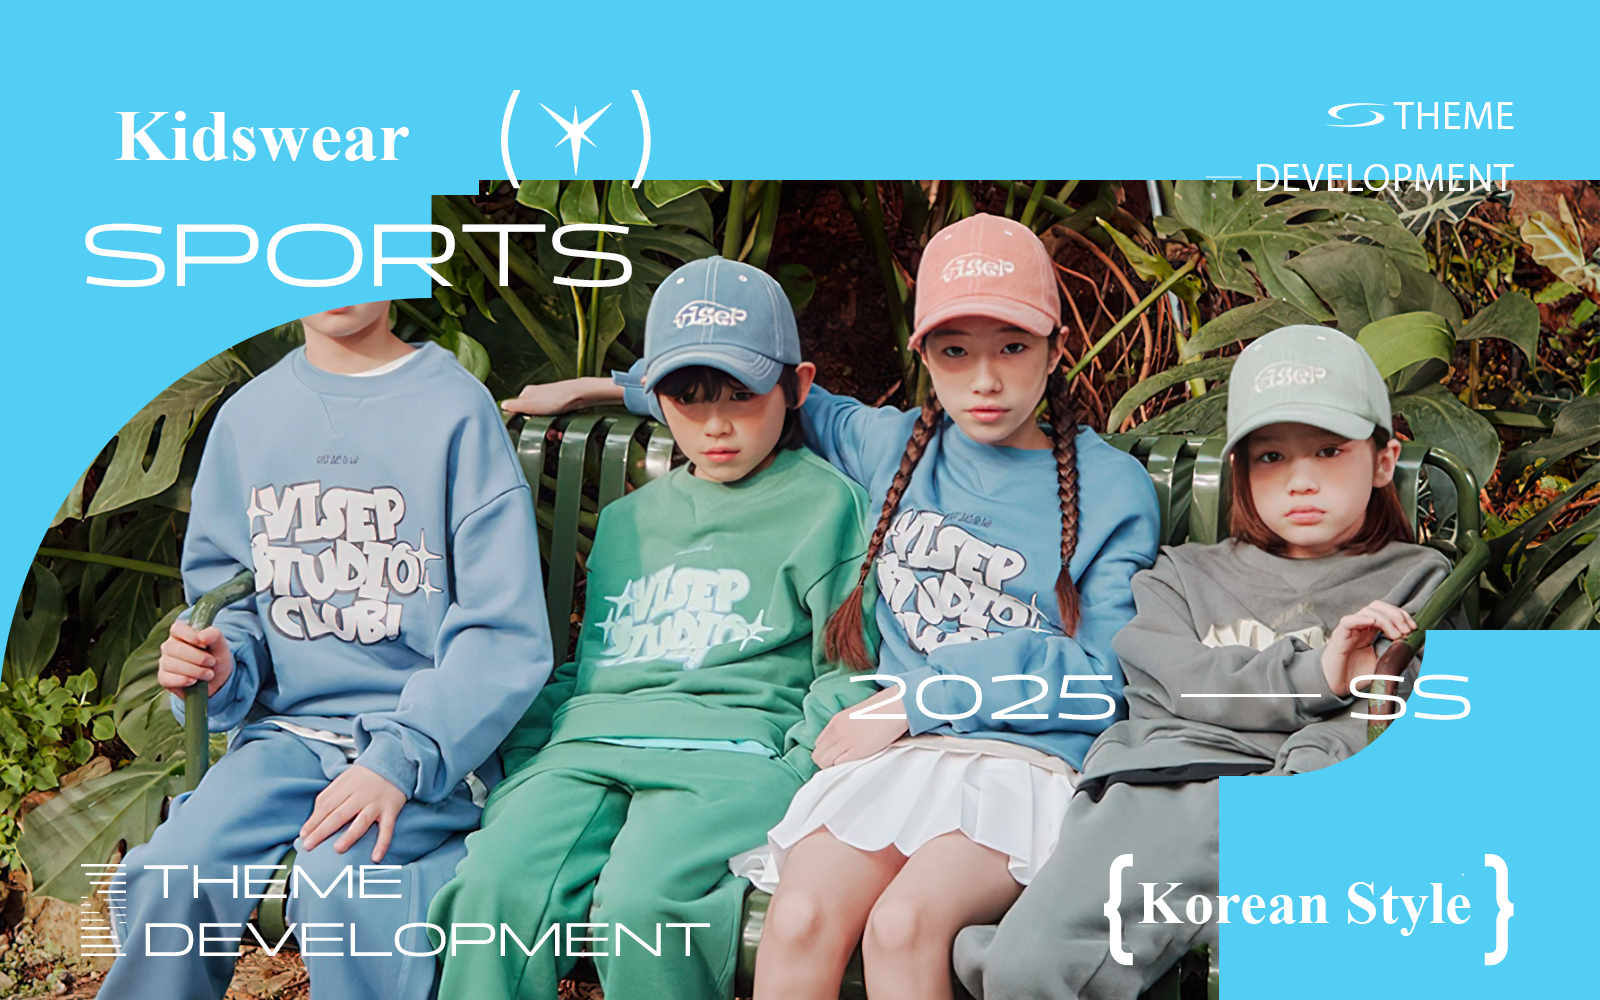 Vitality Sports -- The Design Development of Korean-style Kidswear